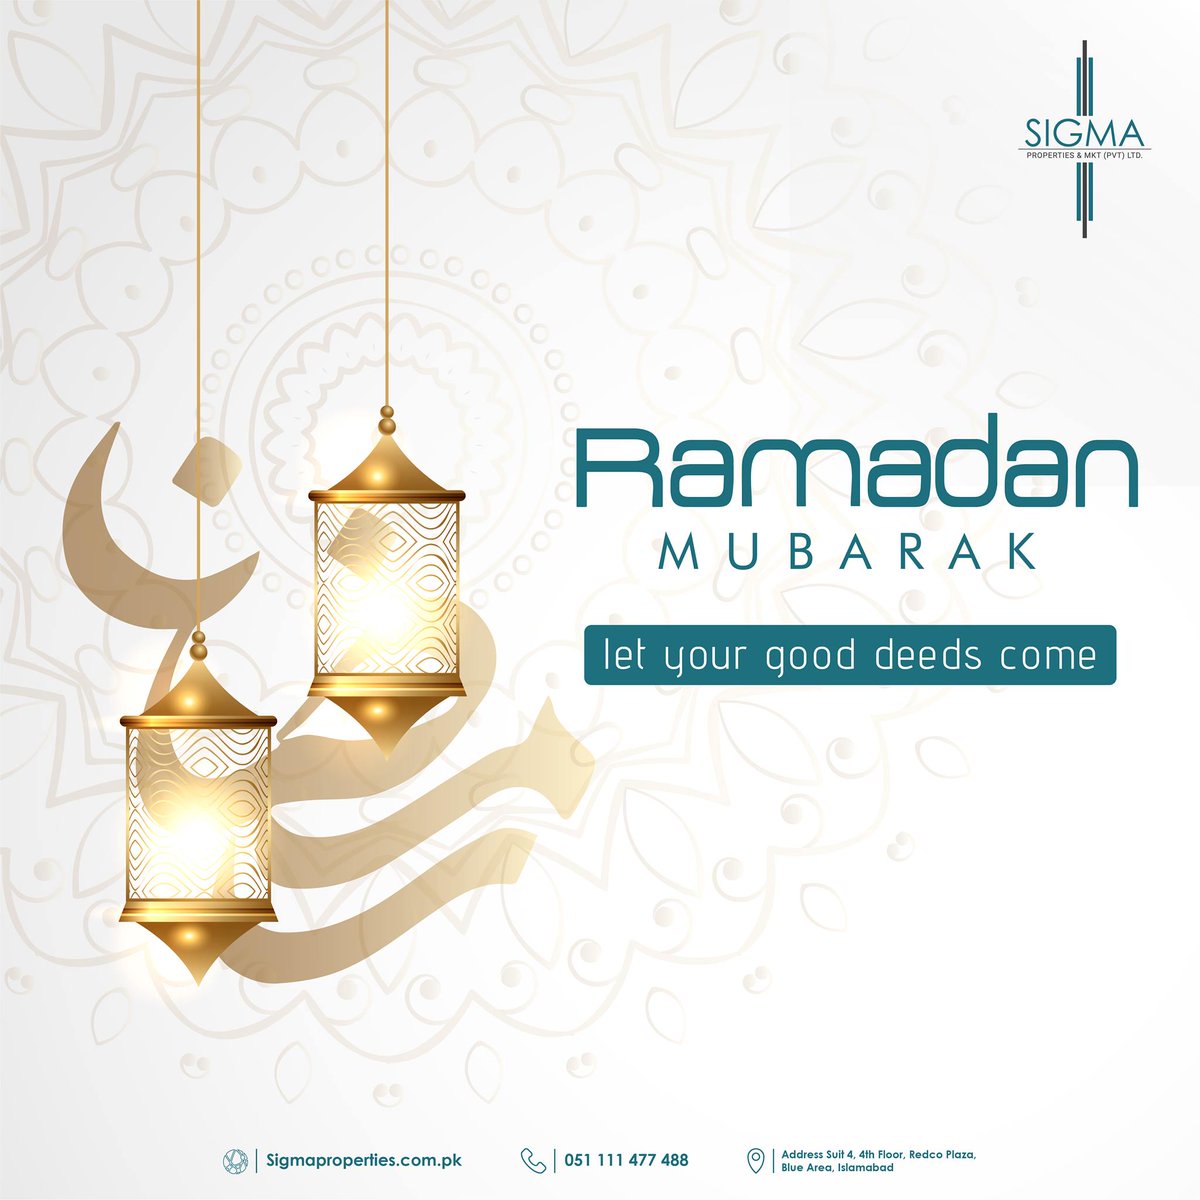 فَمَنْ شَهِدَ مِنْكُمُ الشَّهْرَ فَلْيَصُمْهُ [2:185] So whoever sights [the new moon] of the month, let him fast it #sigmaproperties #Ramadan #HappyRamadan #RamadanMubarak #ramadan2023 #ramadan2023pakistan #ramadan2023🌙 #ramadan2023islamabad #Islam